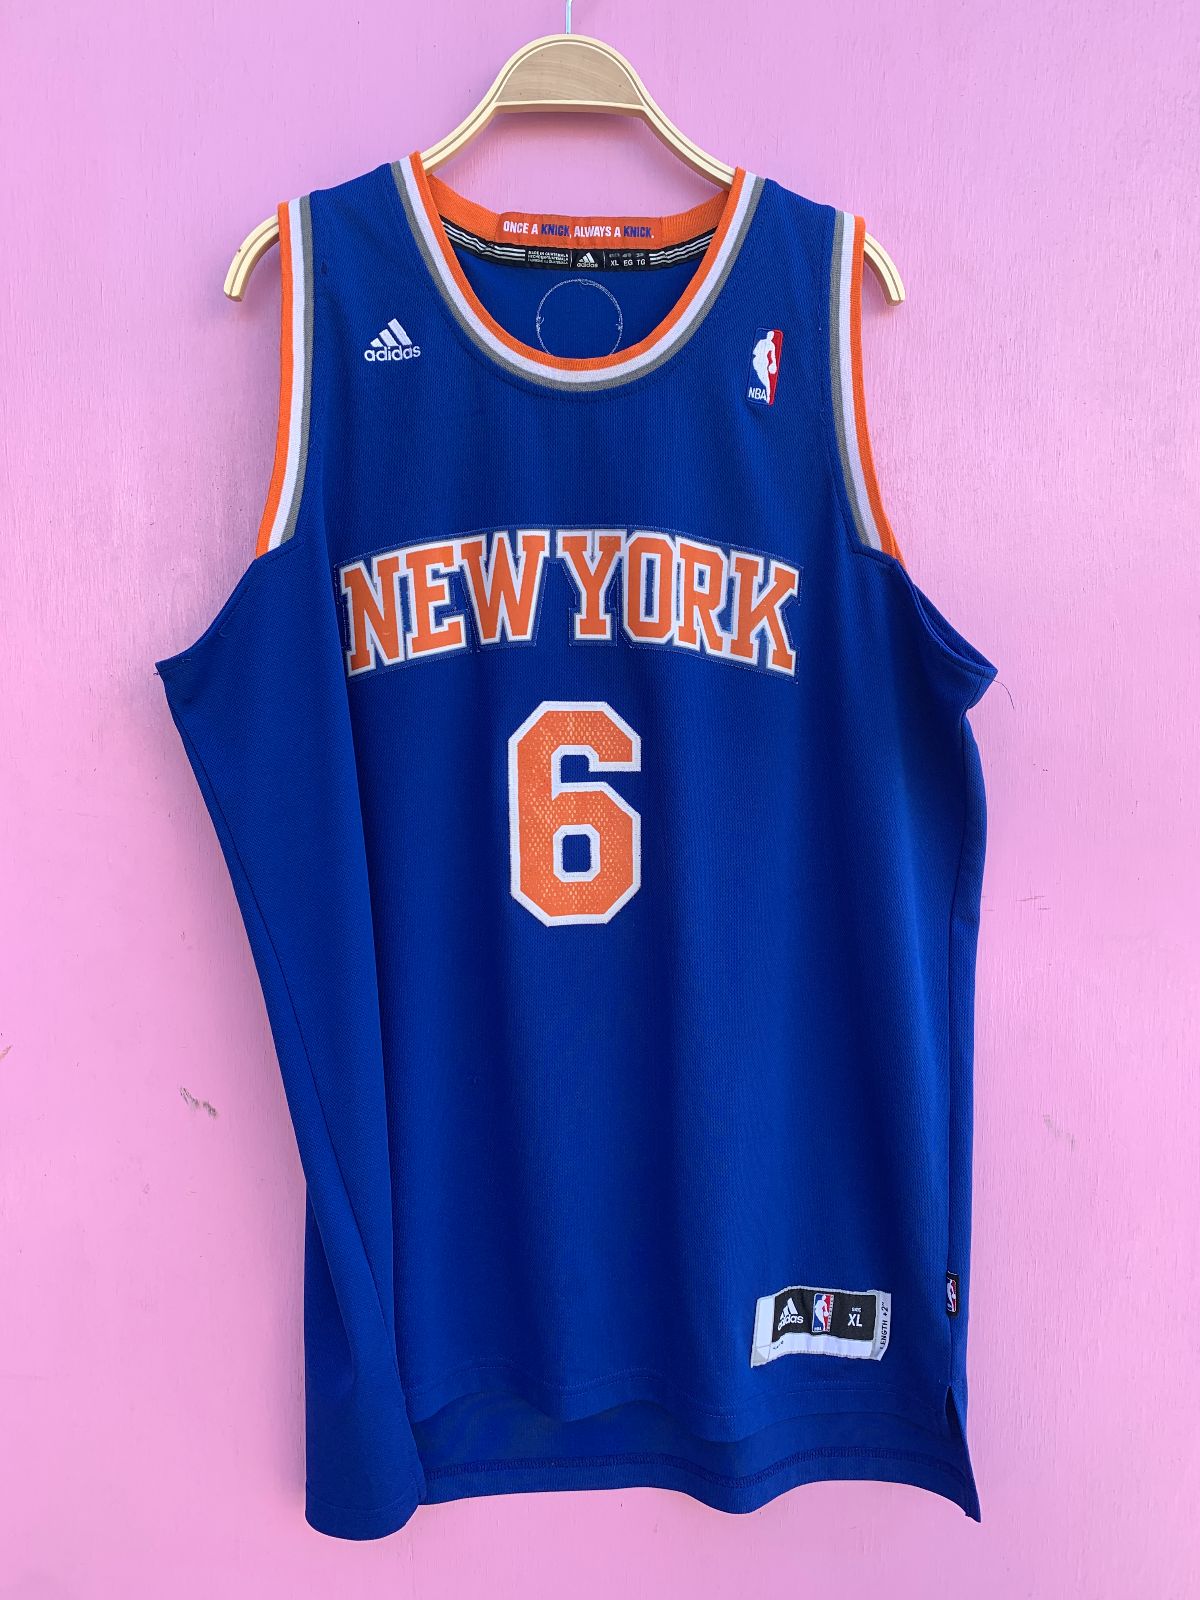 product details: NBA NEW YORK KNICKS #6 CHANDLER BASKETBALL JERSEY photo